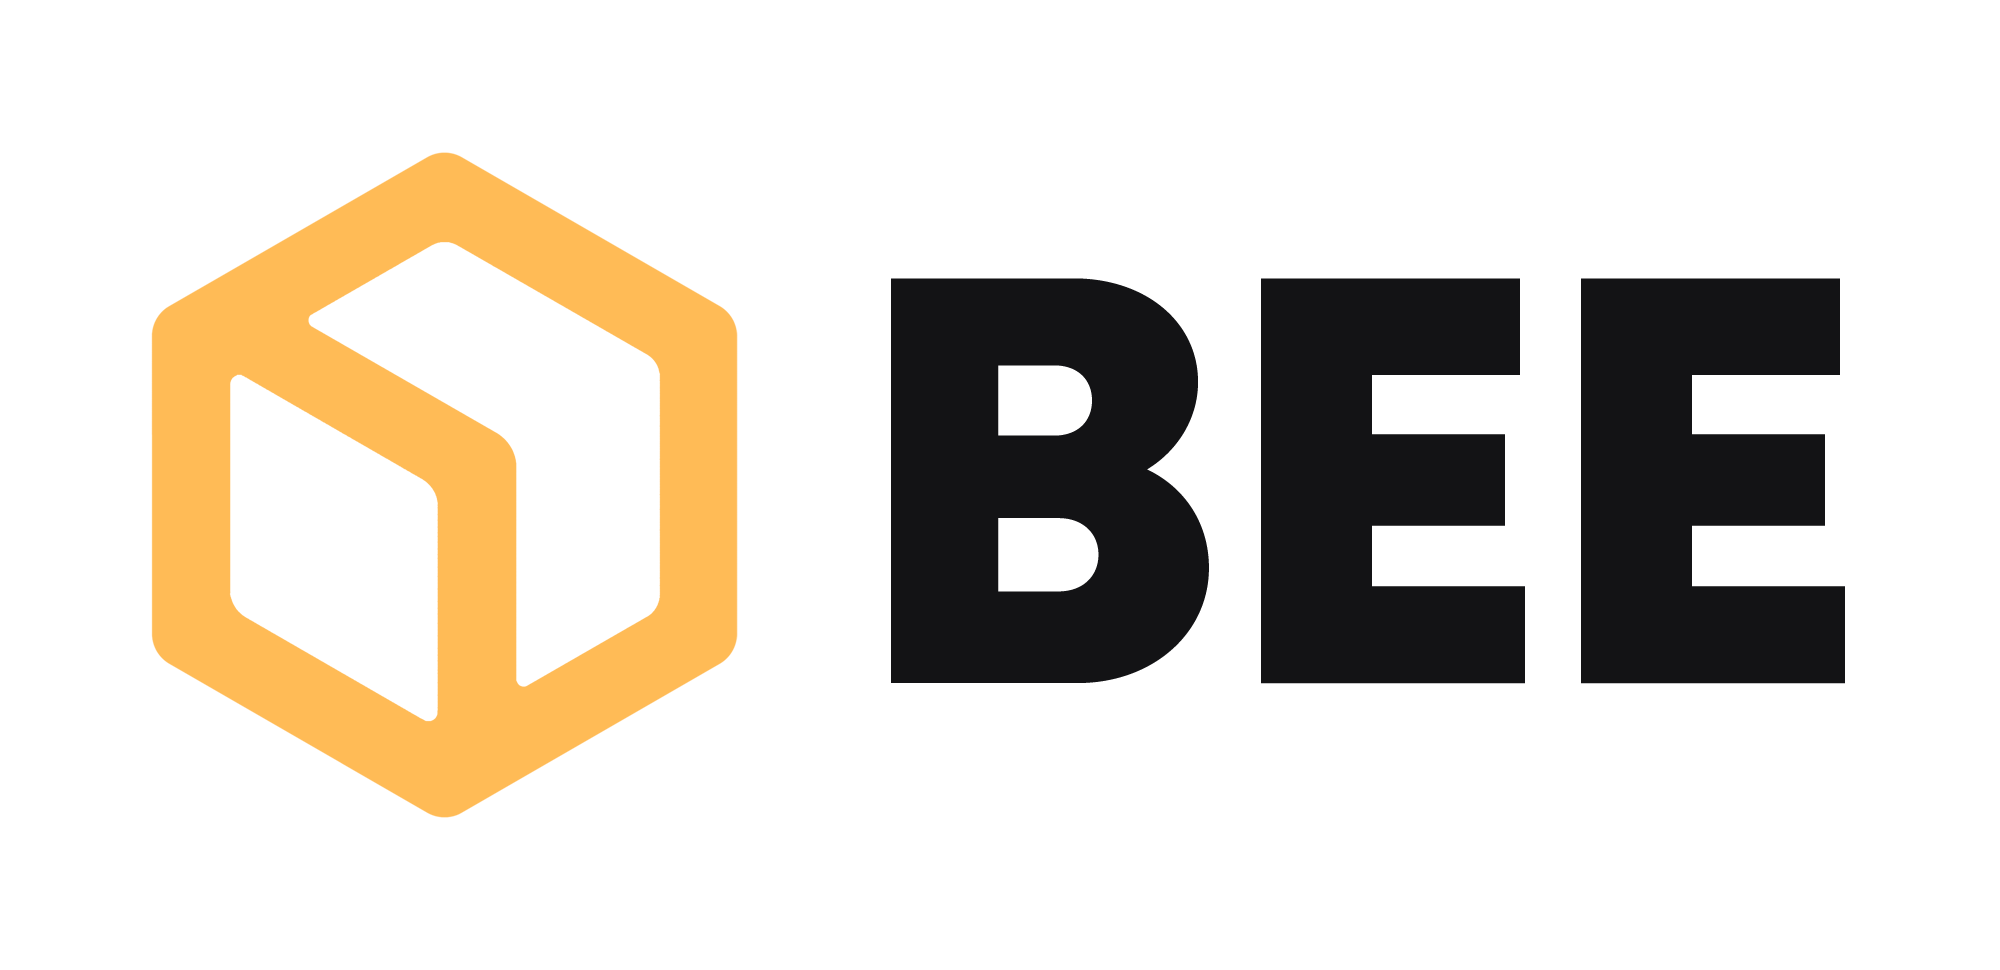 BEE Logo